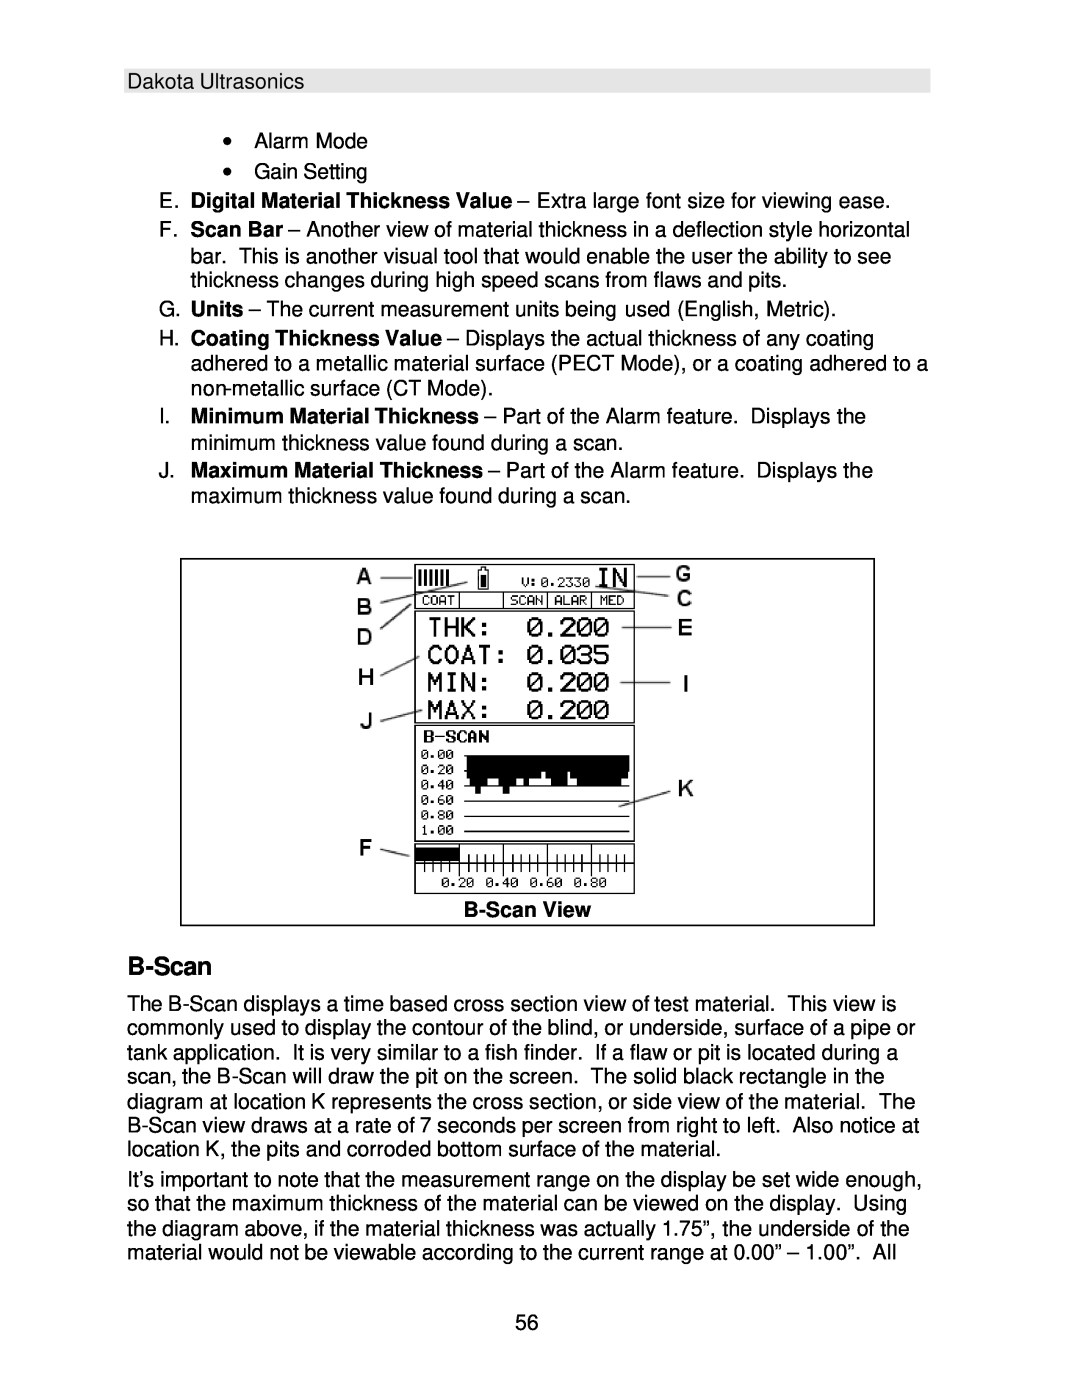 Dakota Digital CMX operation manual B-Scan View 